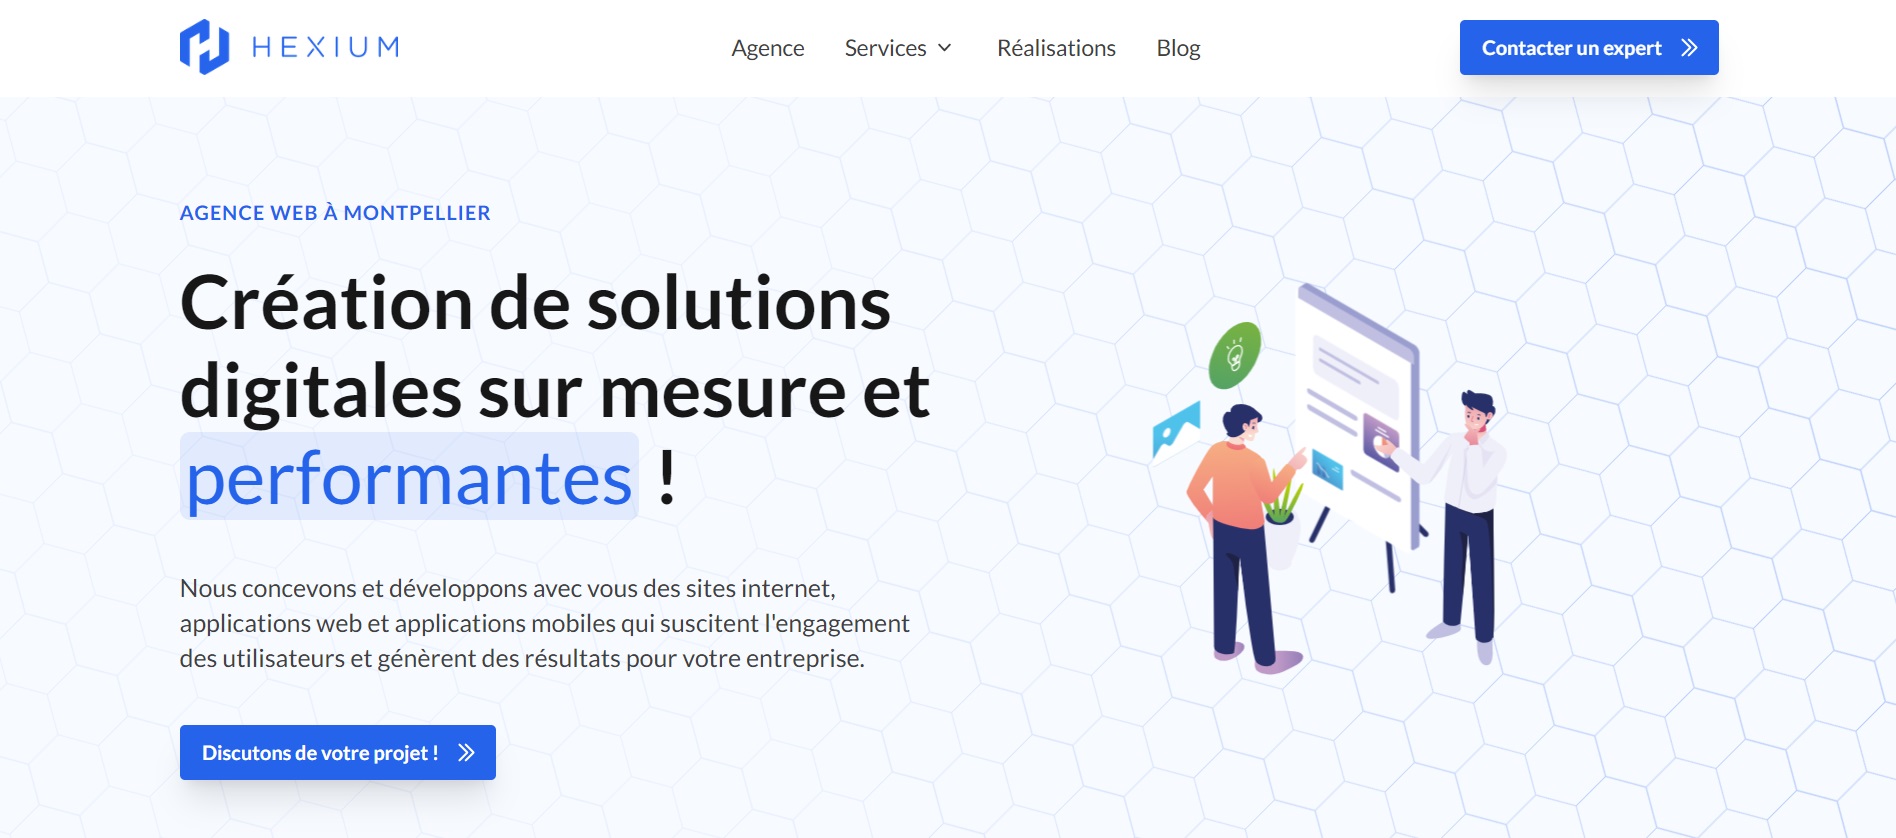  Hexium Agence Web et Digitale - Agence Web à Montpellier 